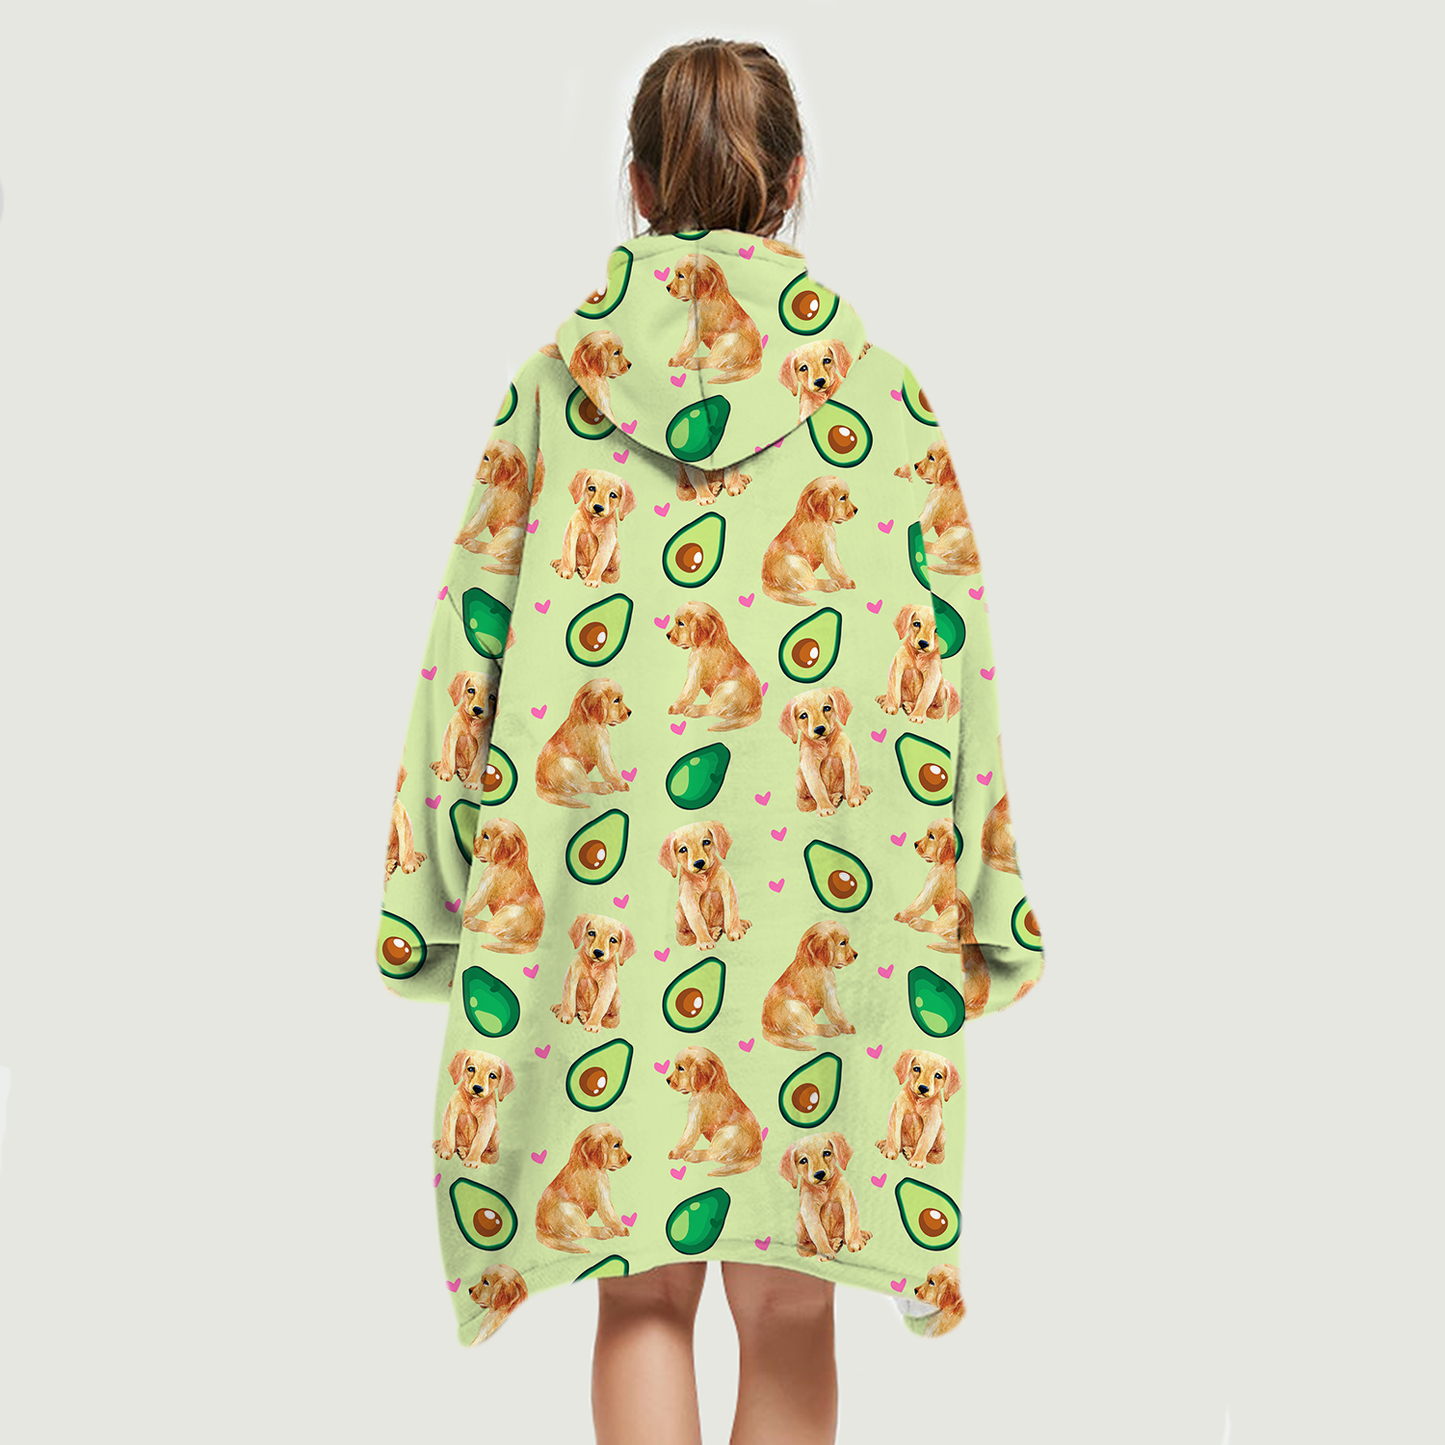 Ich liebe Avocados – Golden Retriever Fleece-Decke-Hoodie